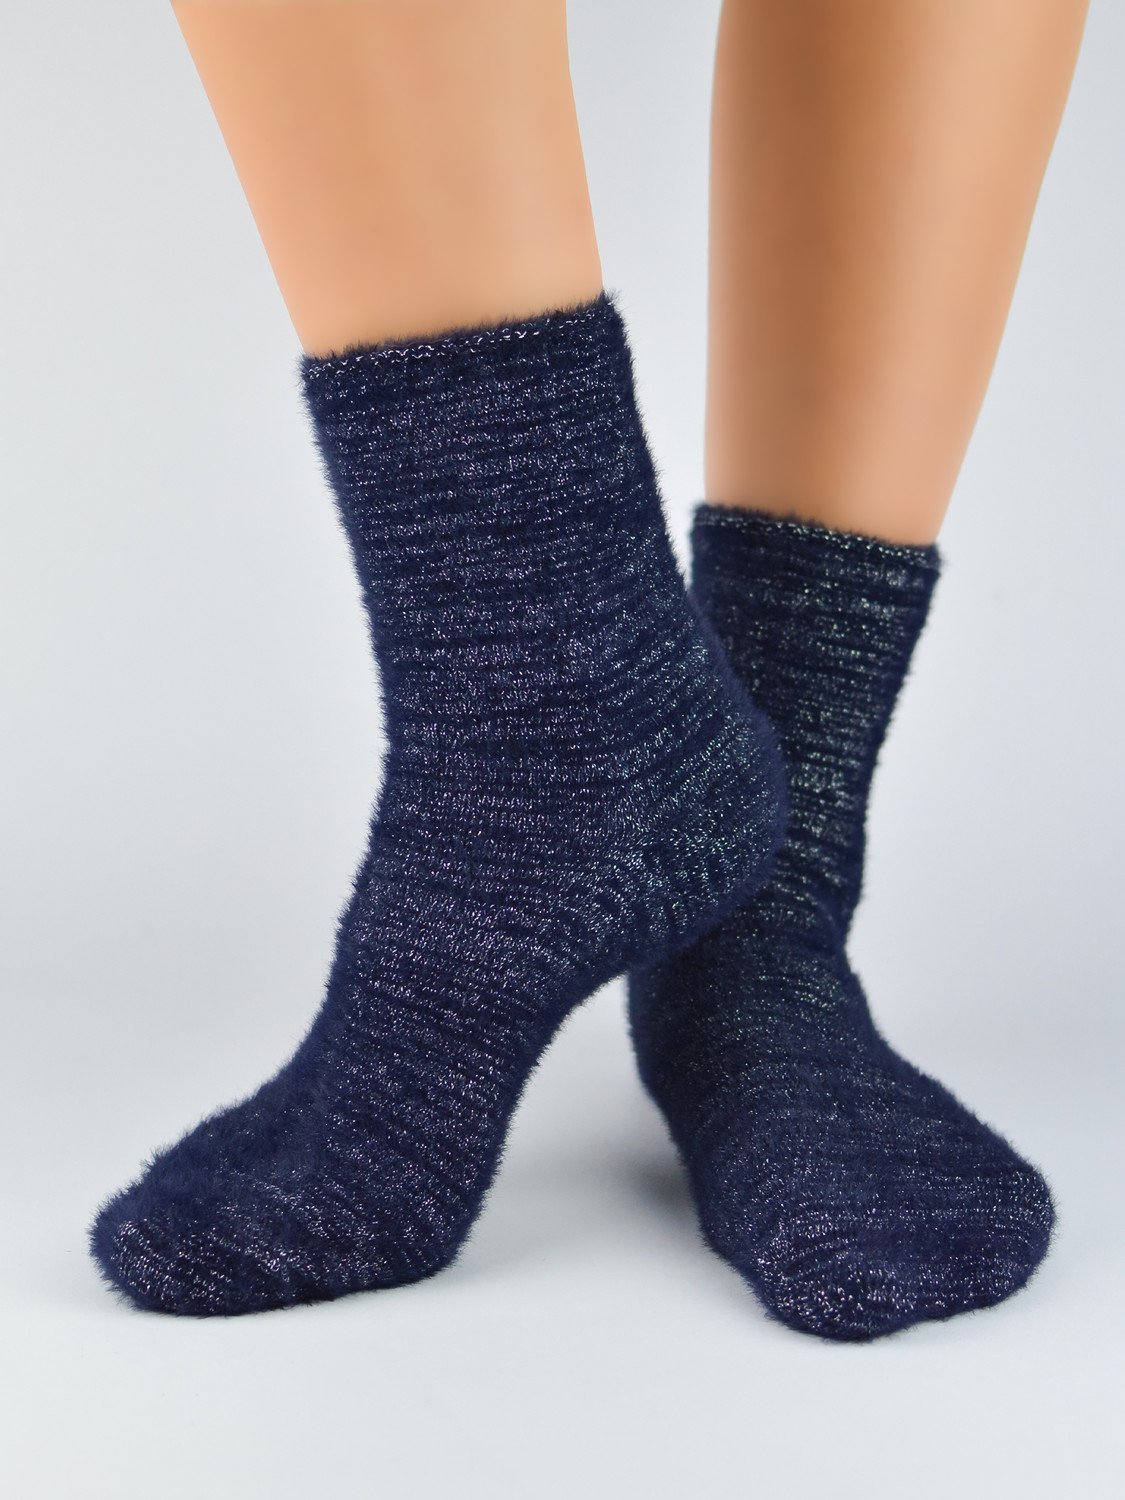 NOVITI Woman's Socks SB037-W-01 Navy Blue